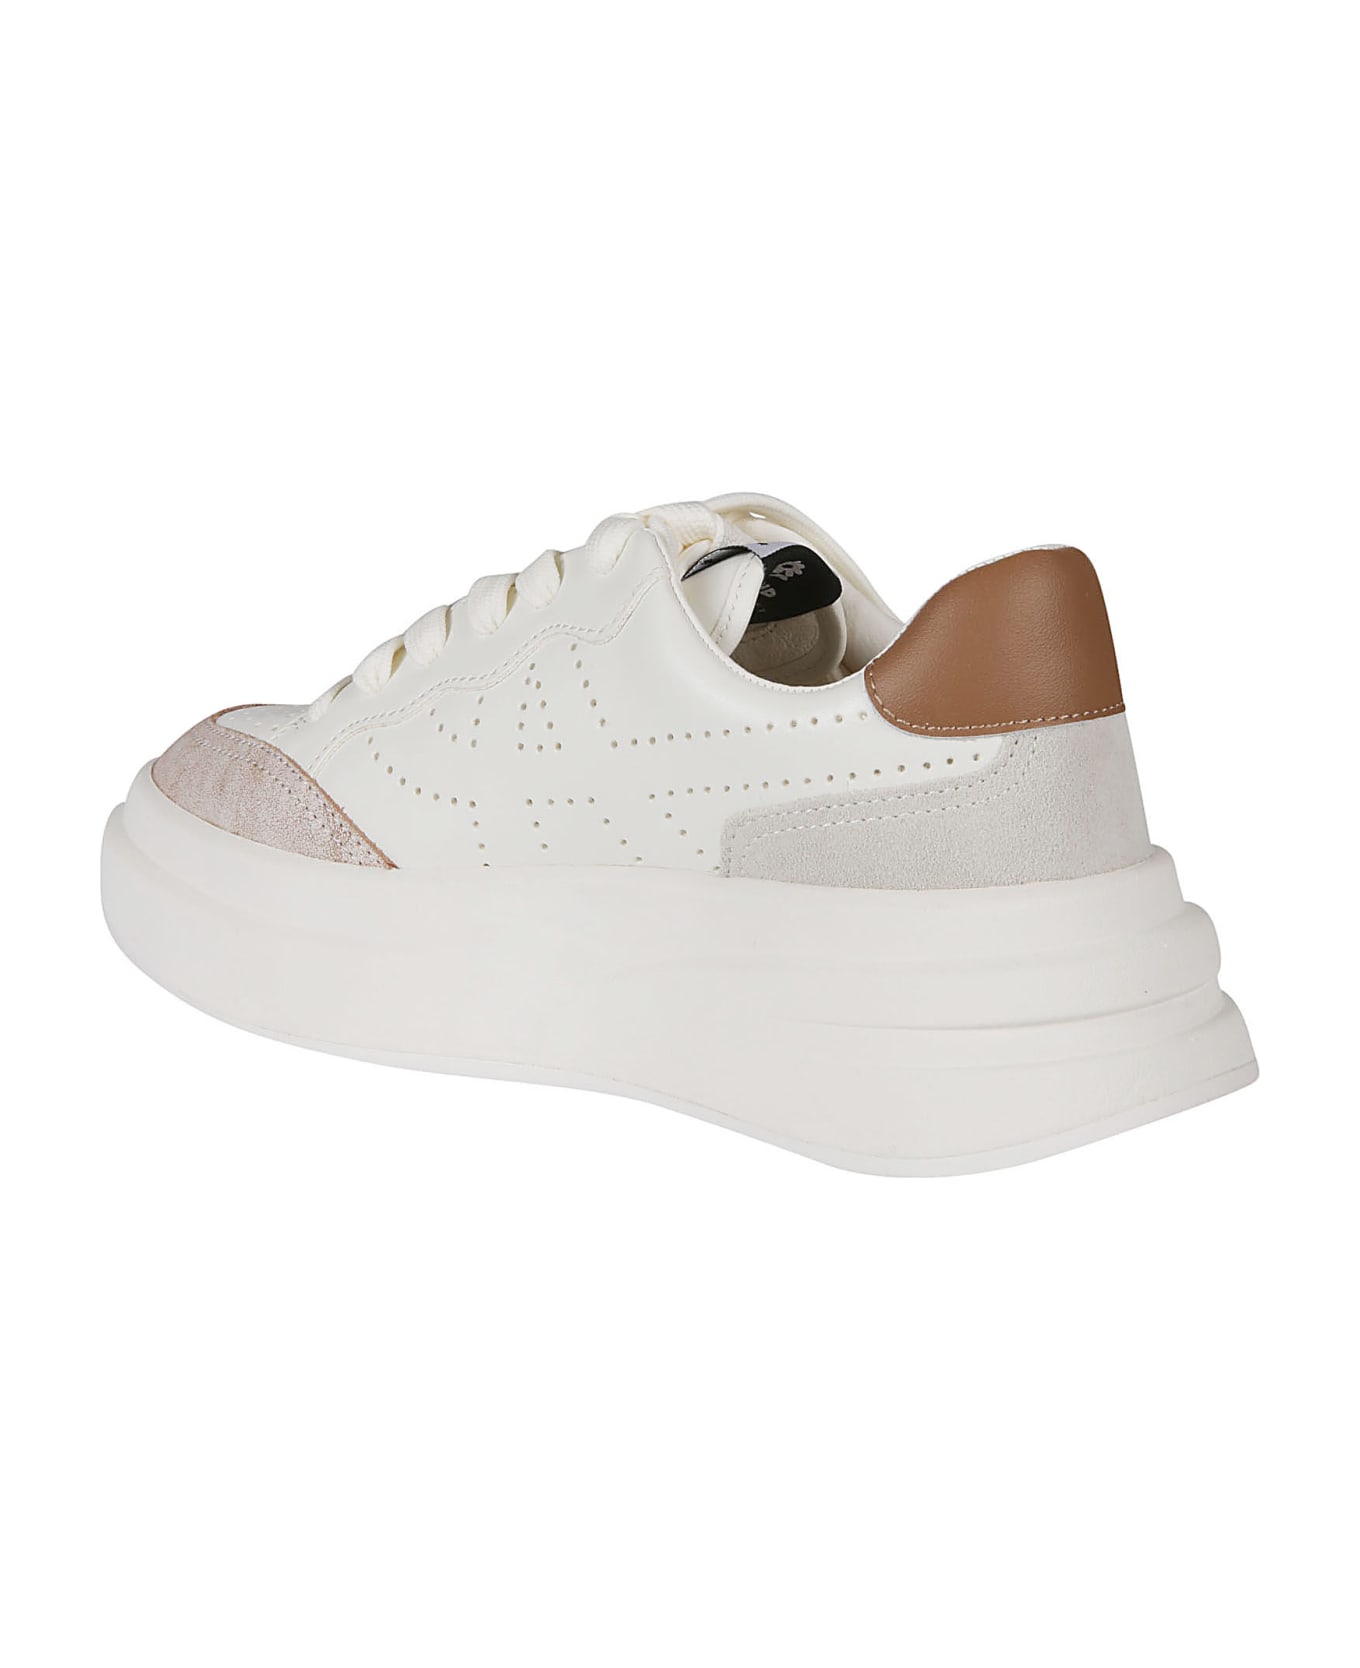 Ash Impulsbis Sneakers - Cinnamon/white